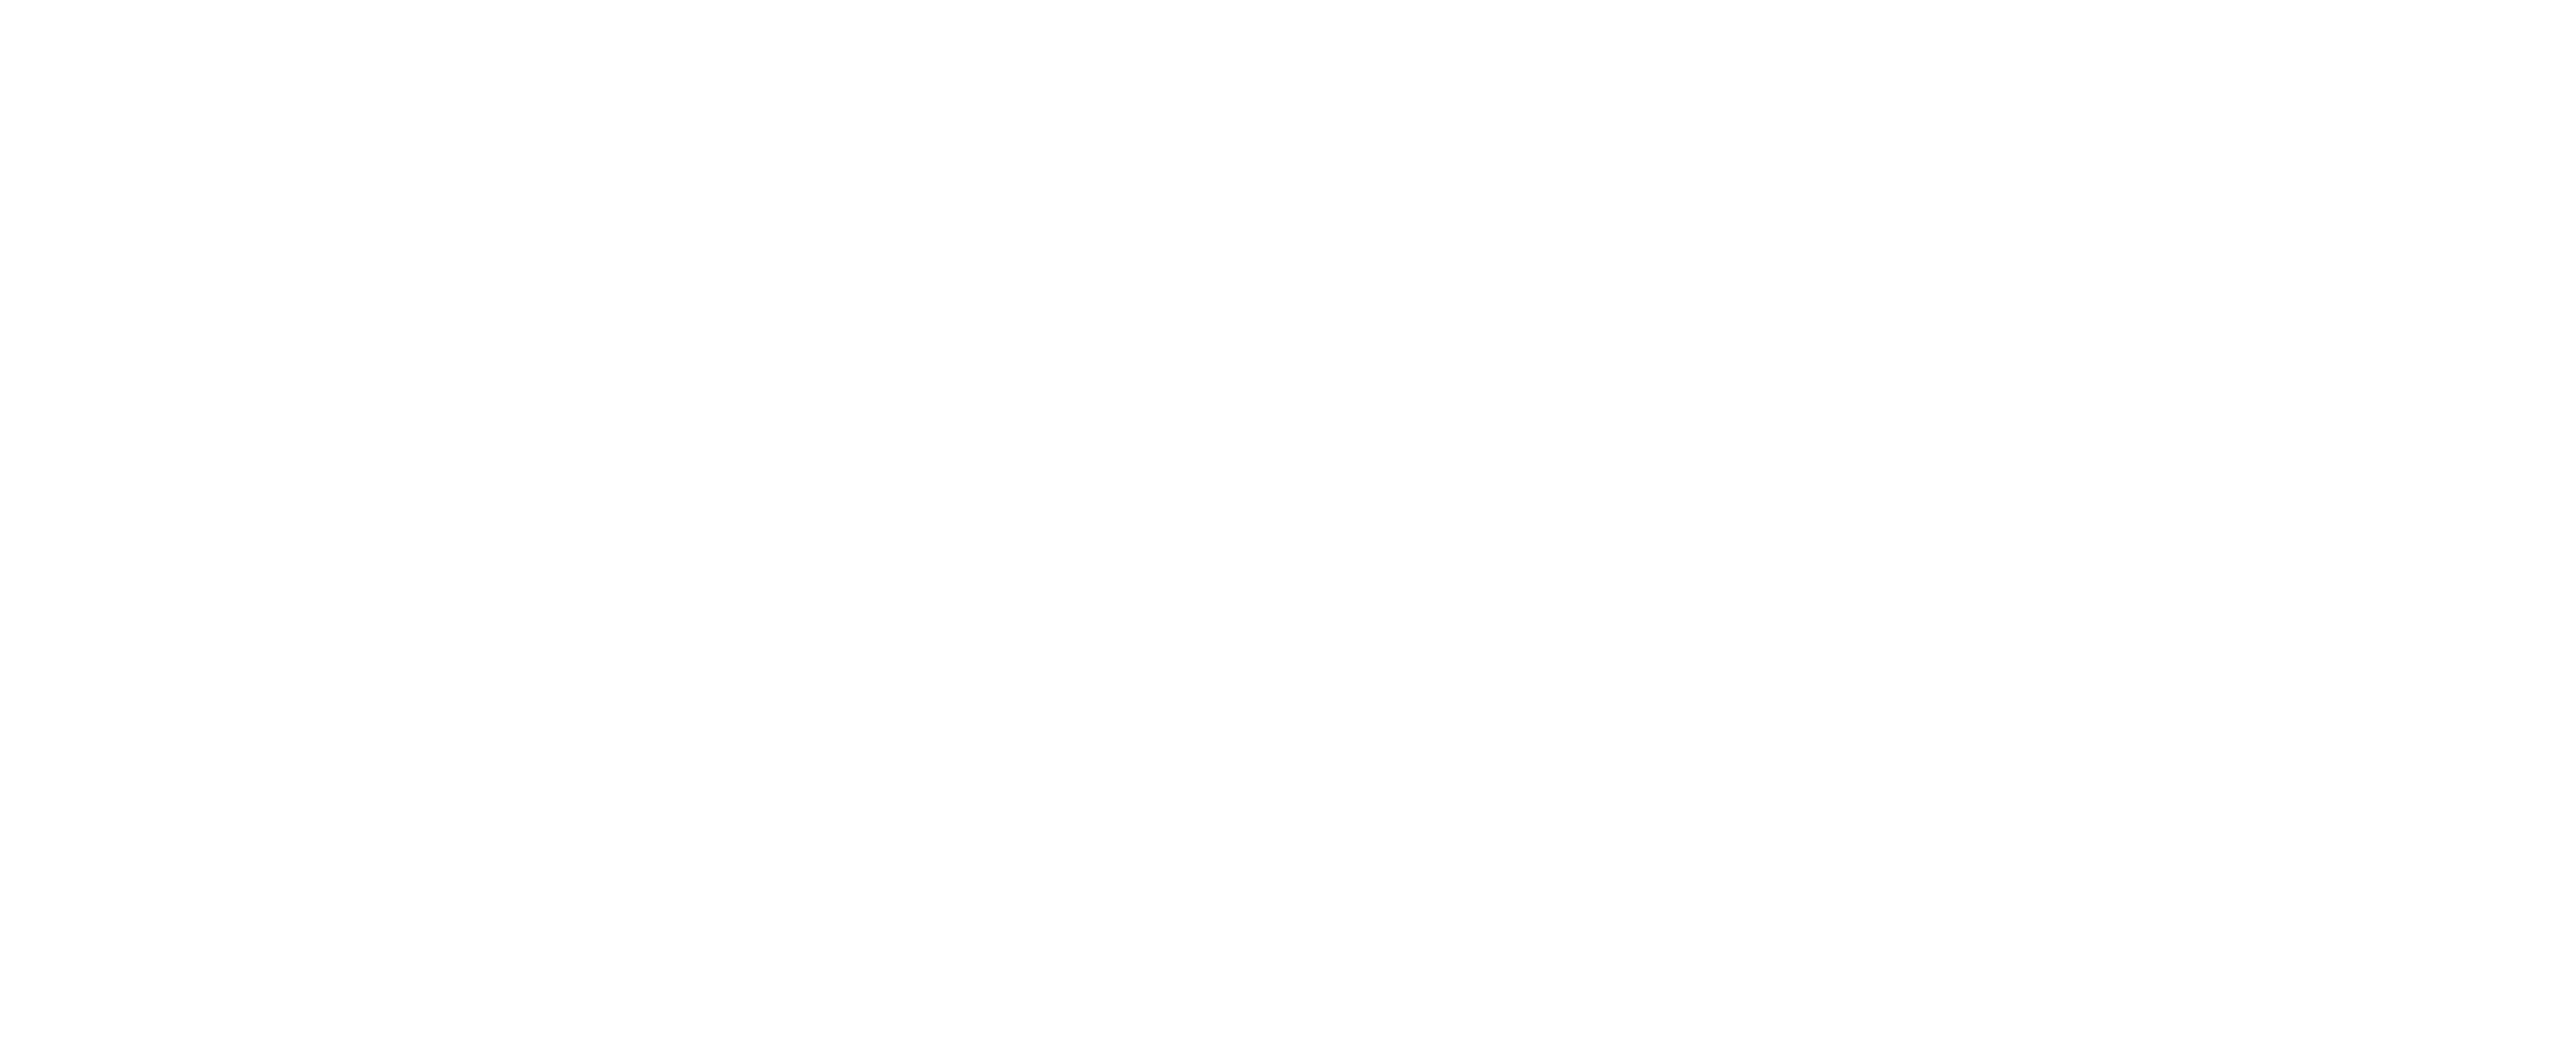 Ed Stafford: Man Woman Child Wild logo